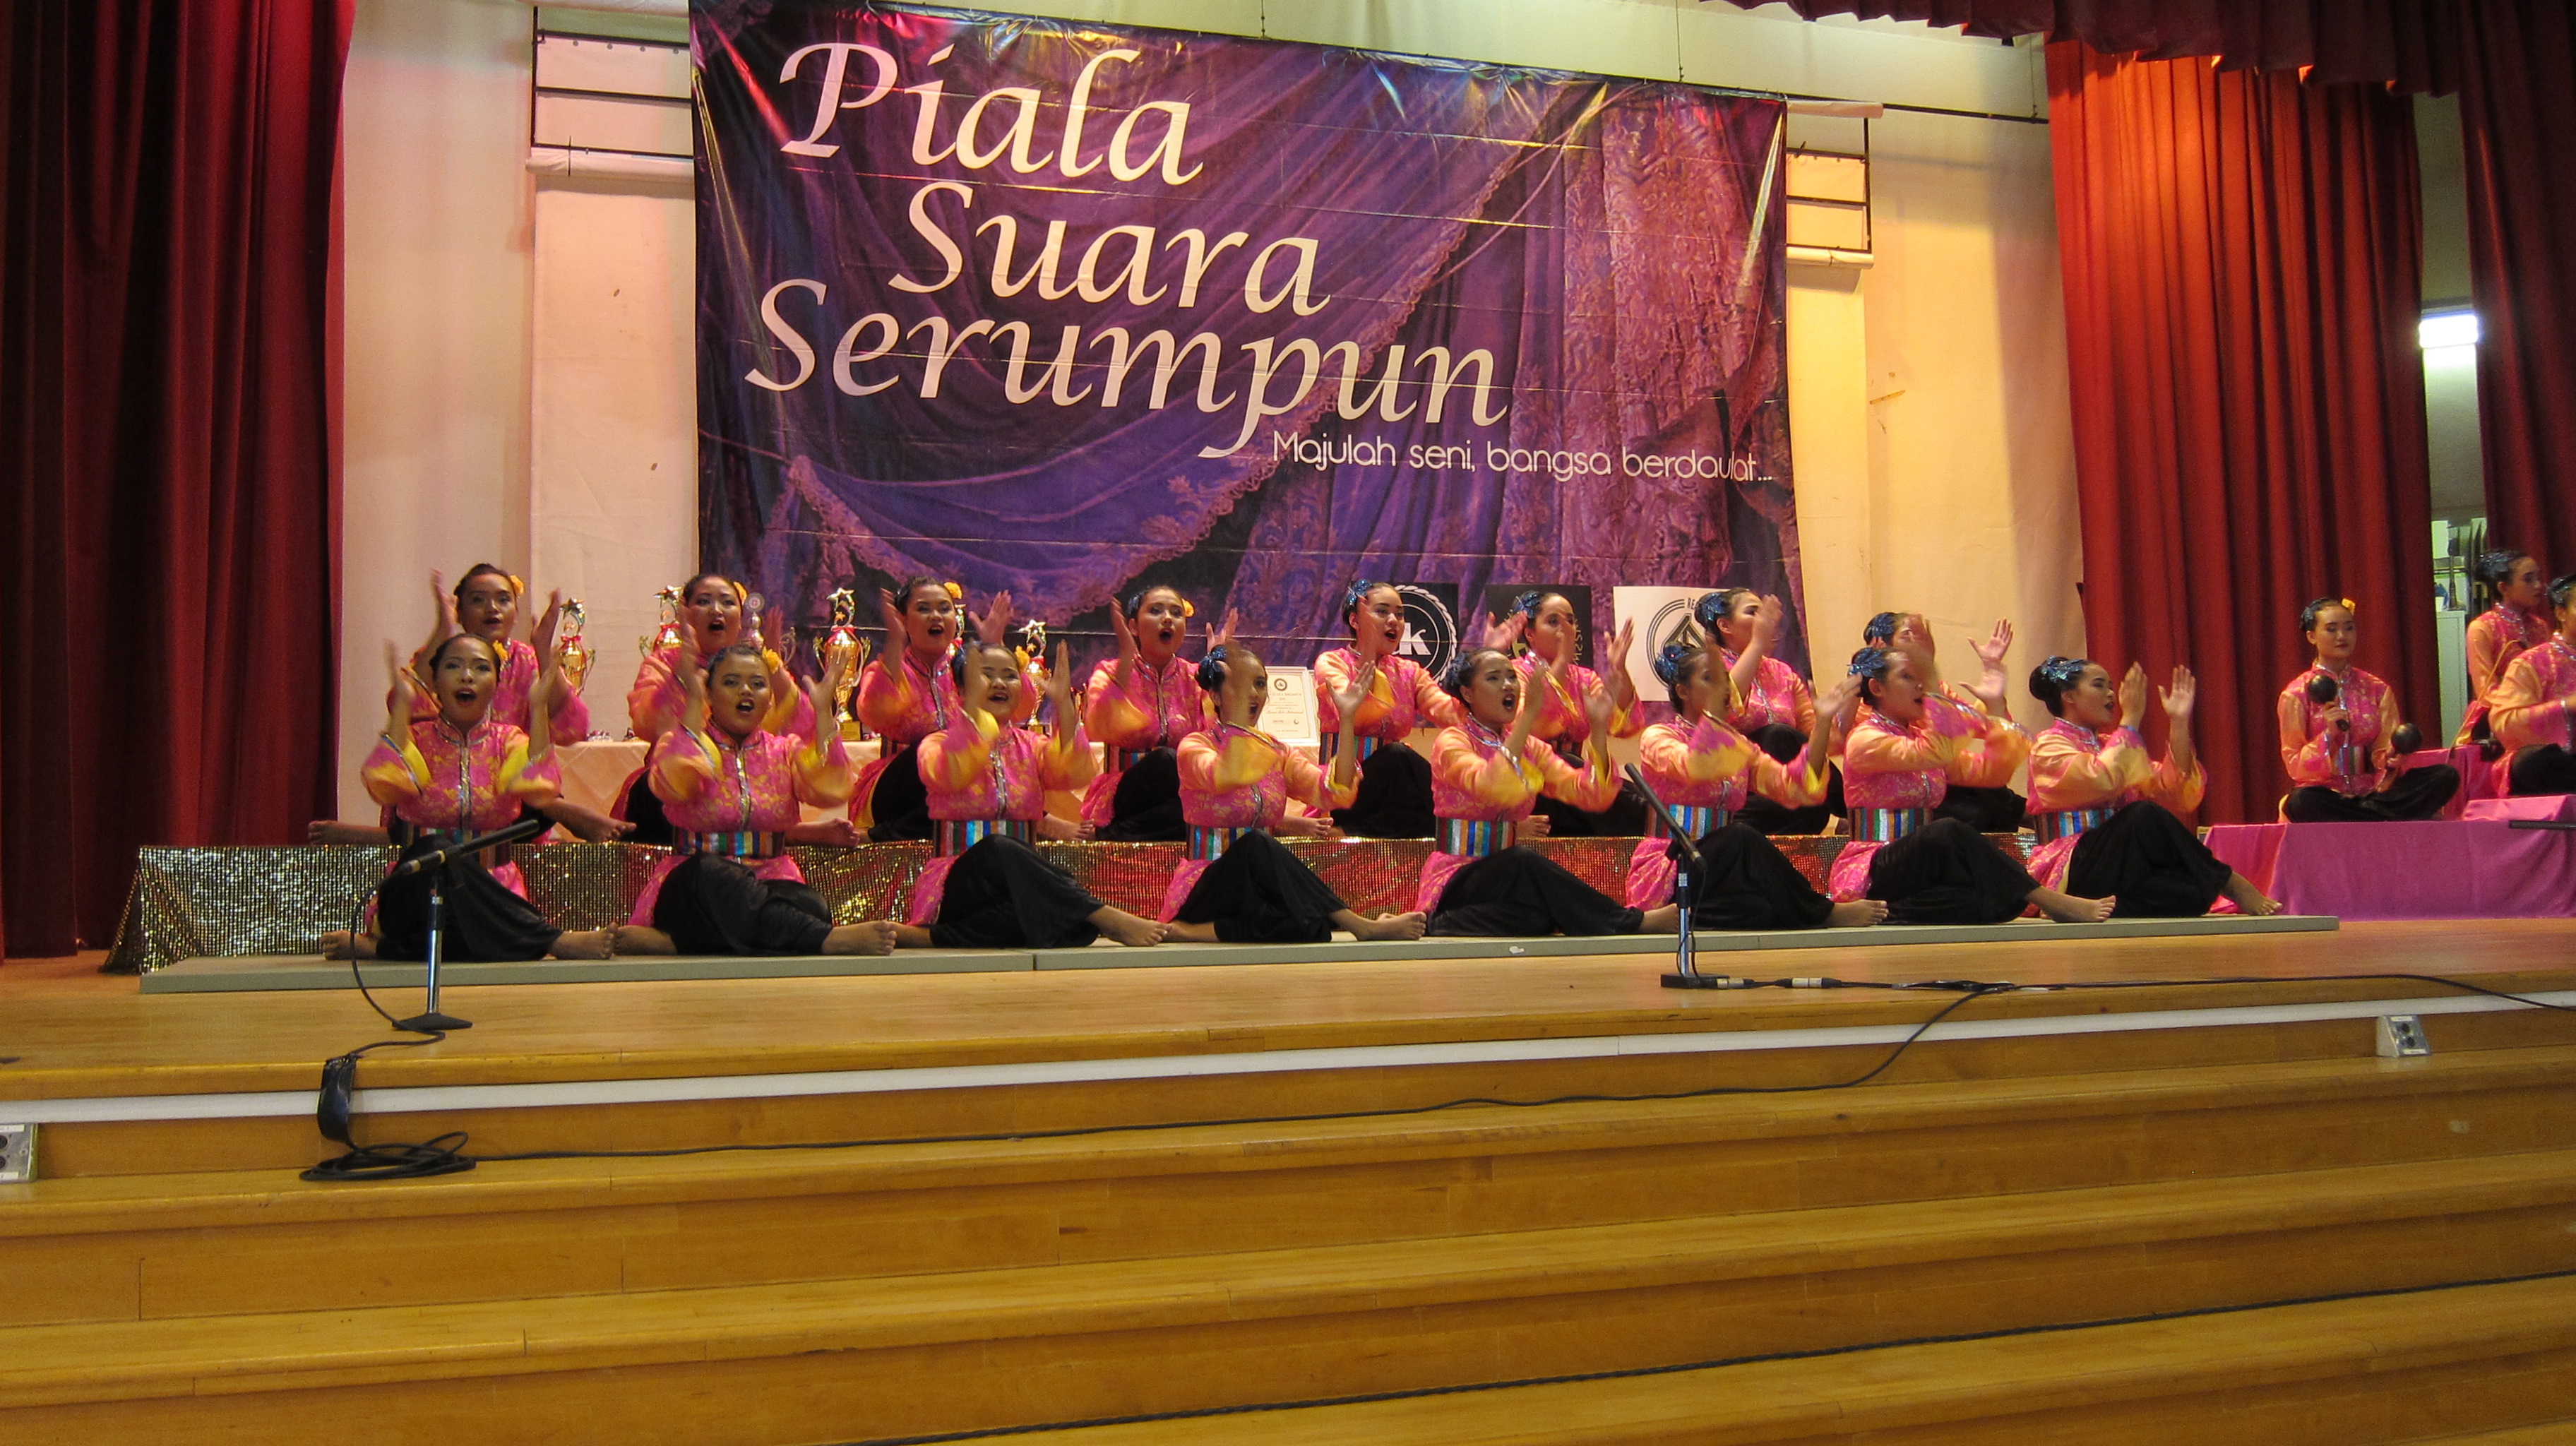 The <em>awok-awok</em> (chorus) from the Sutera Madura Women’s Dikir Barat Group performing the lagu juara (opening song) at the Piala Suara Serumpun competition, held in 2017.